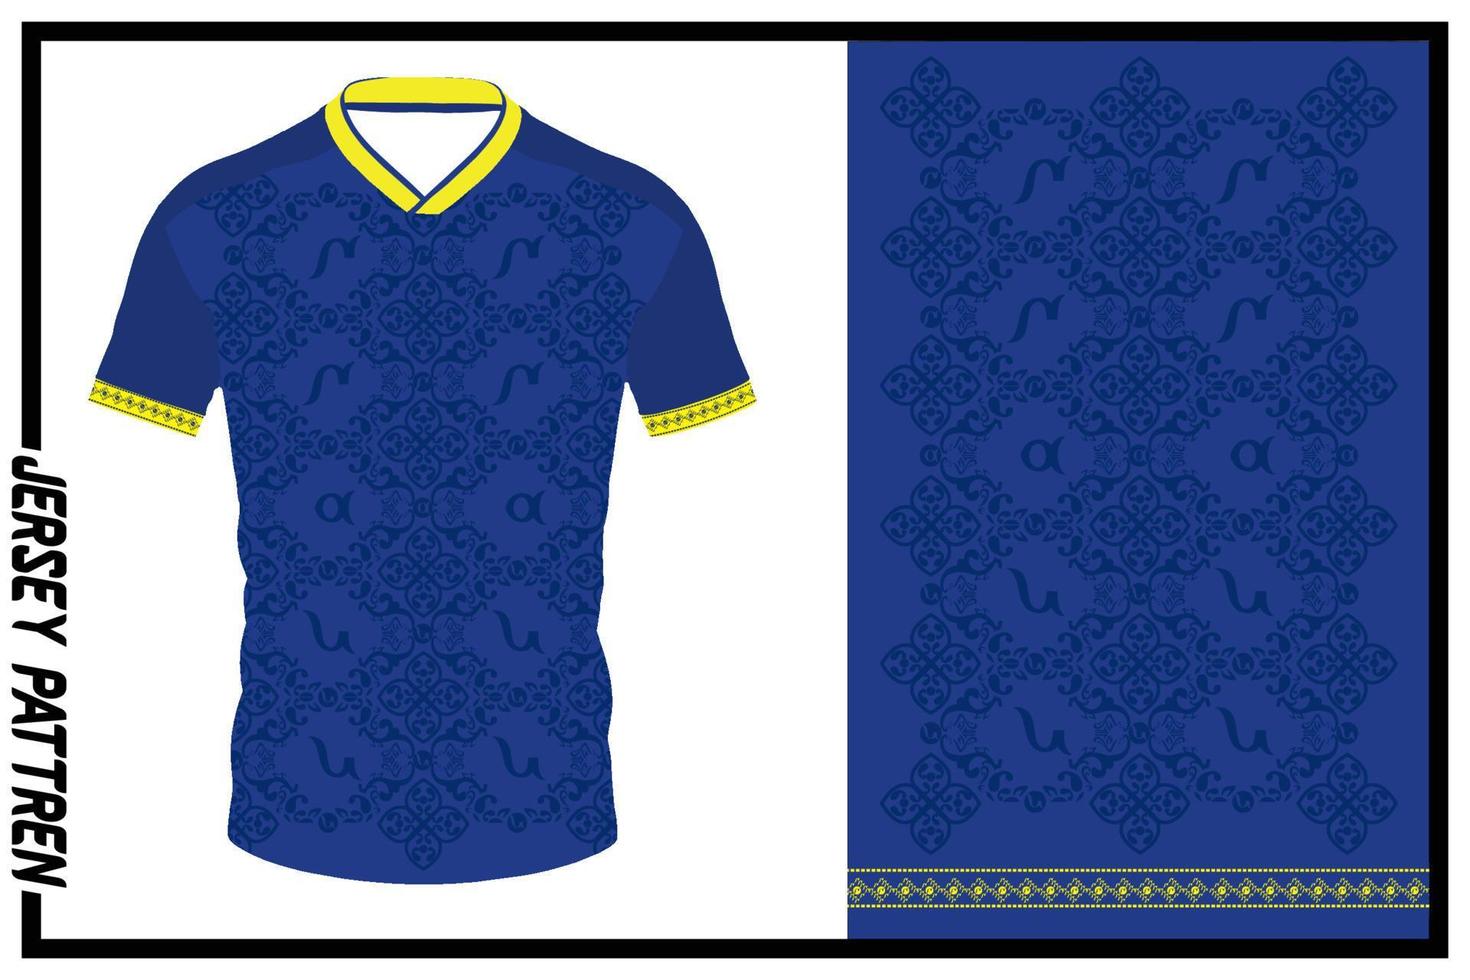 bespotten omhoog voetbal Jersey batik kleding stof patroon vrij vector